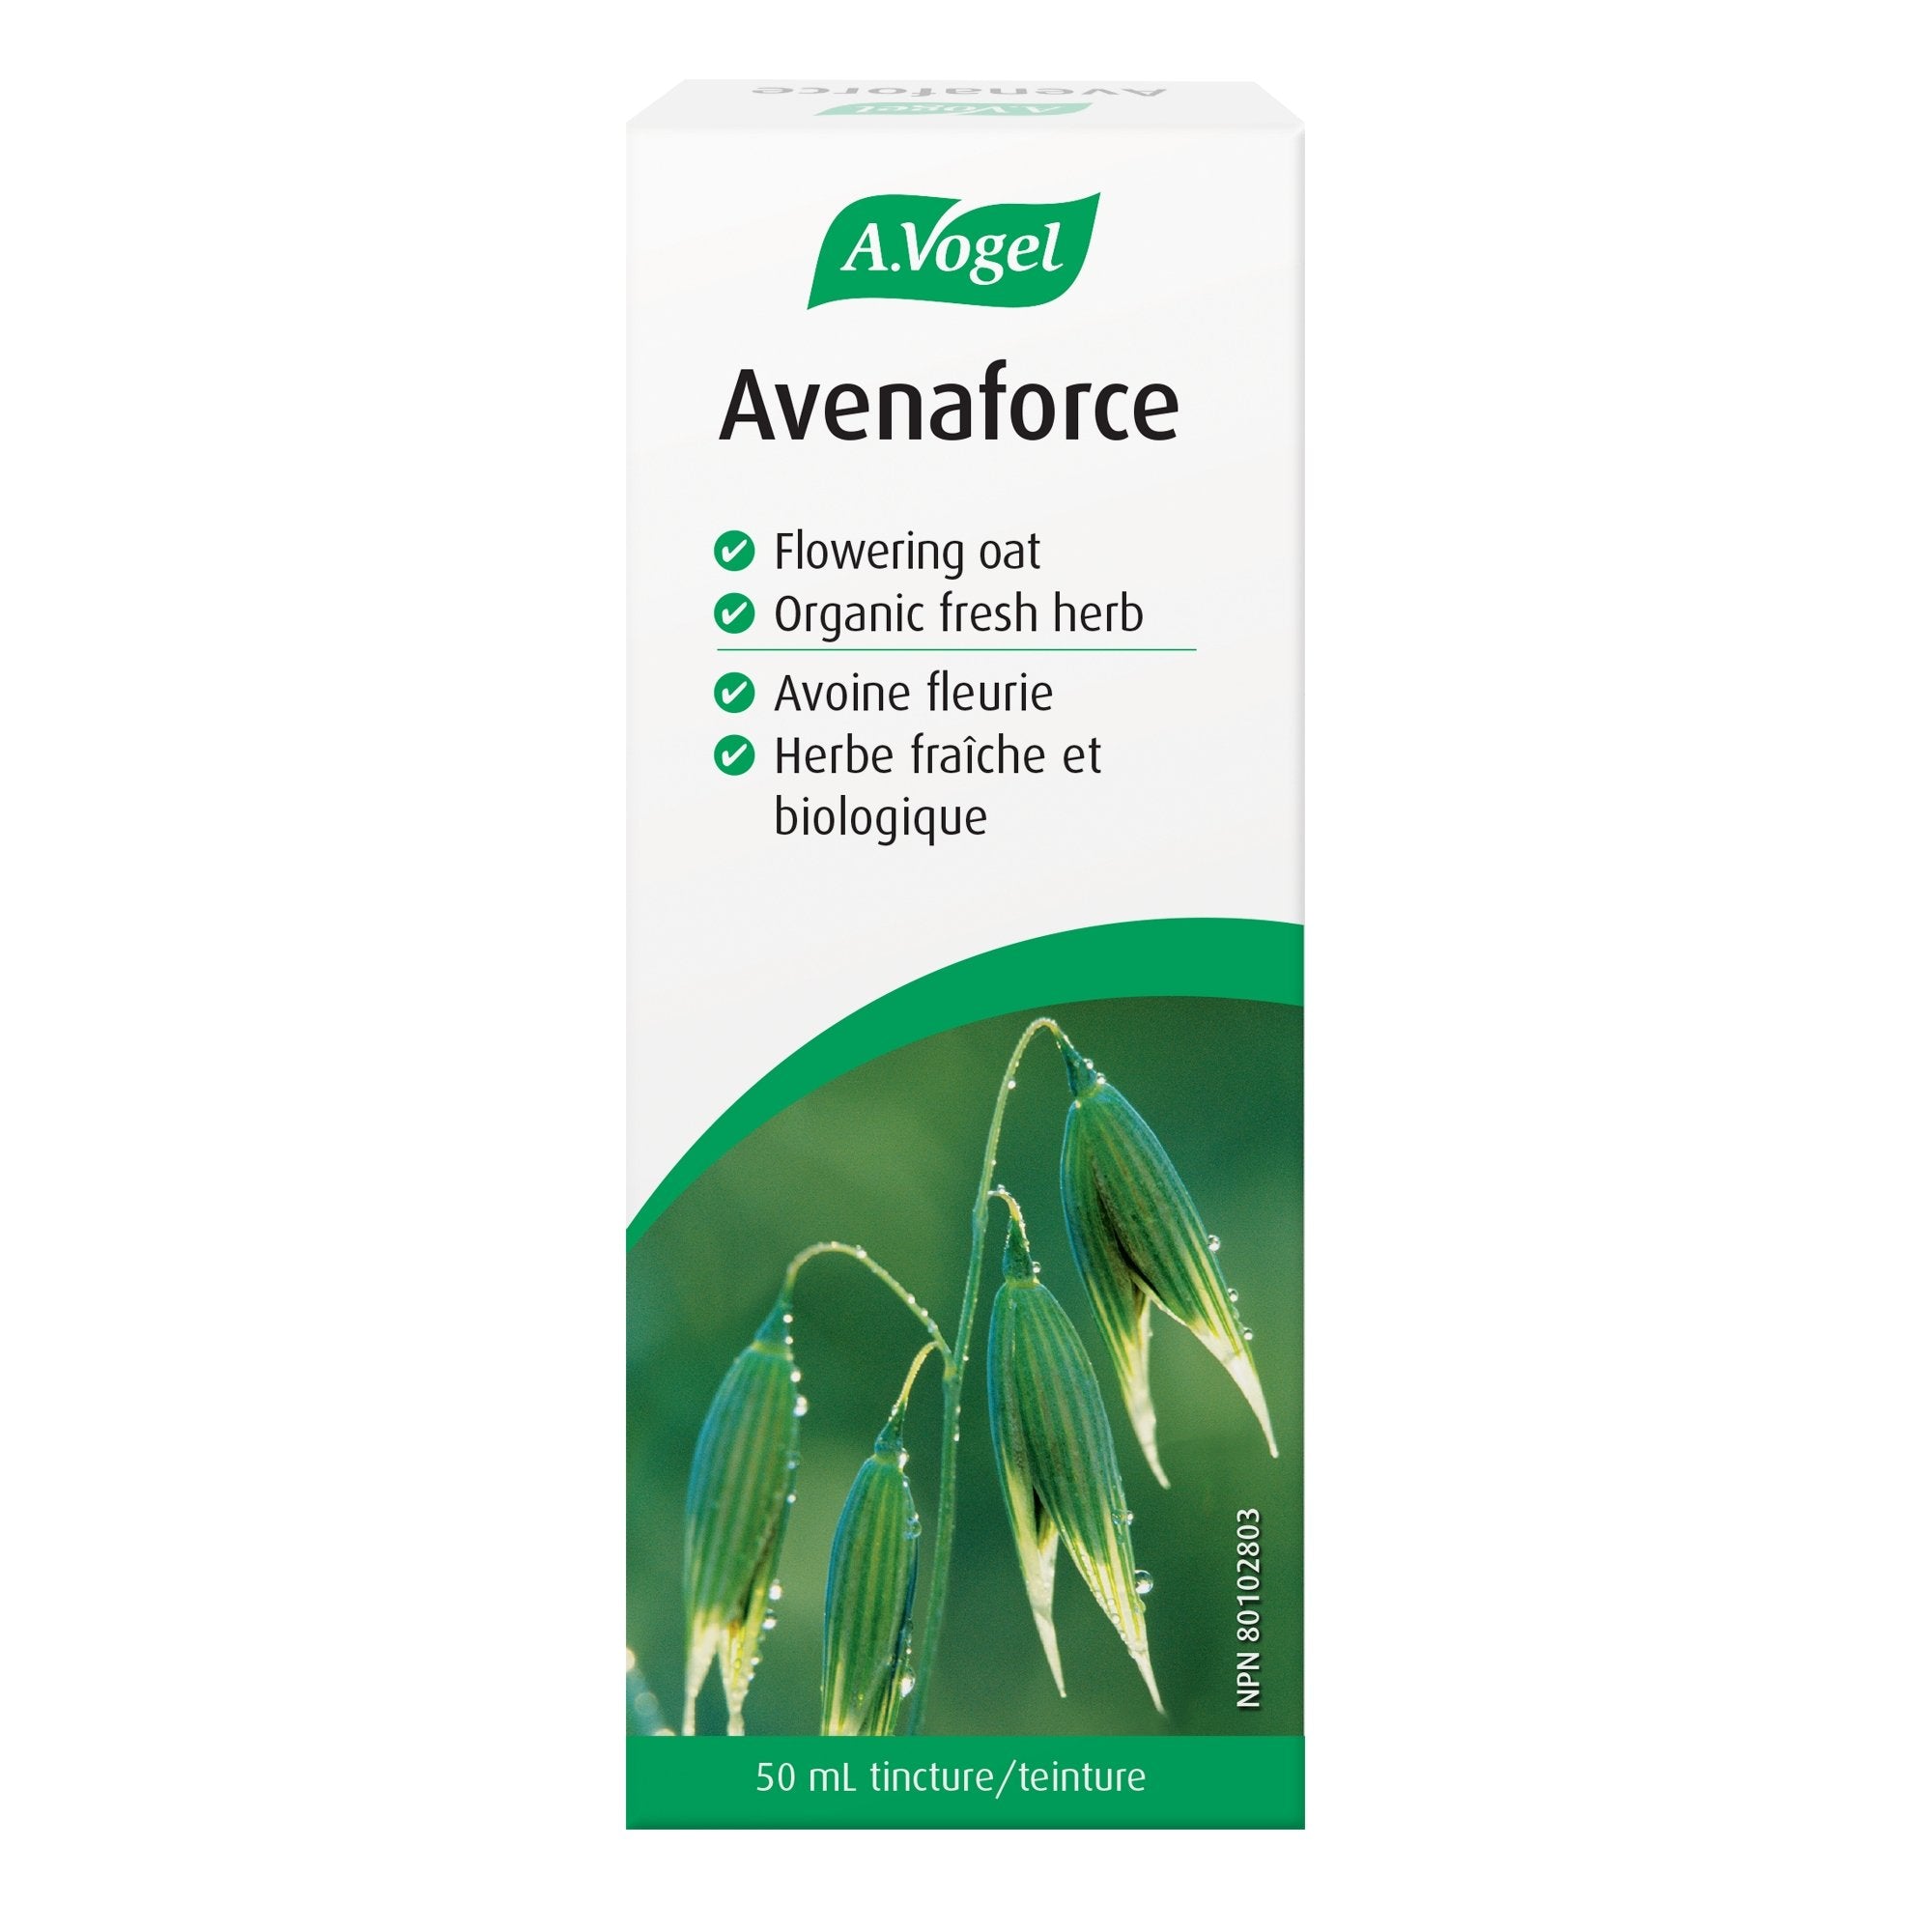 Avenaforce Fresh Avena Sativa Extract 50mL - A.Vogel Canada